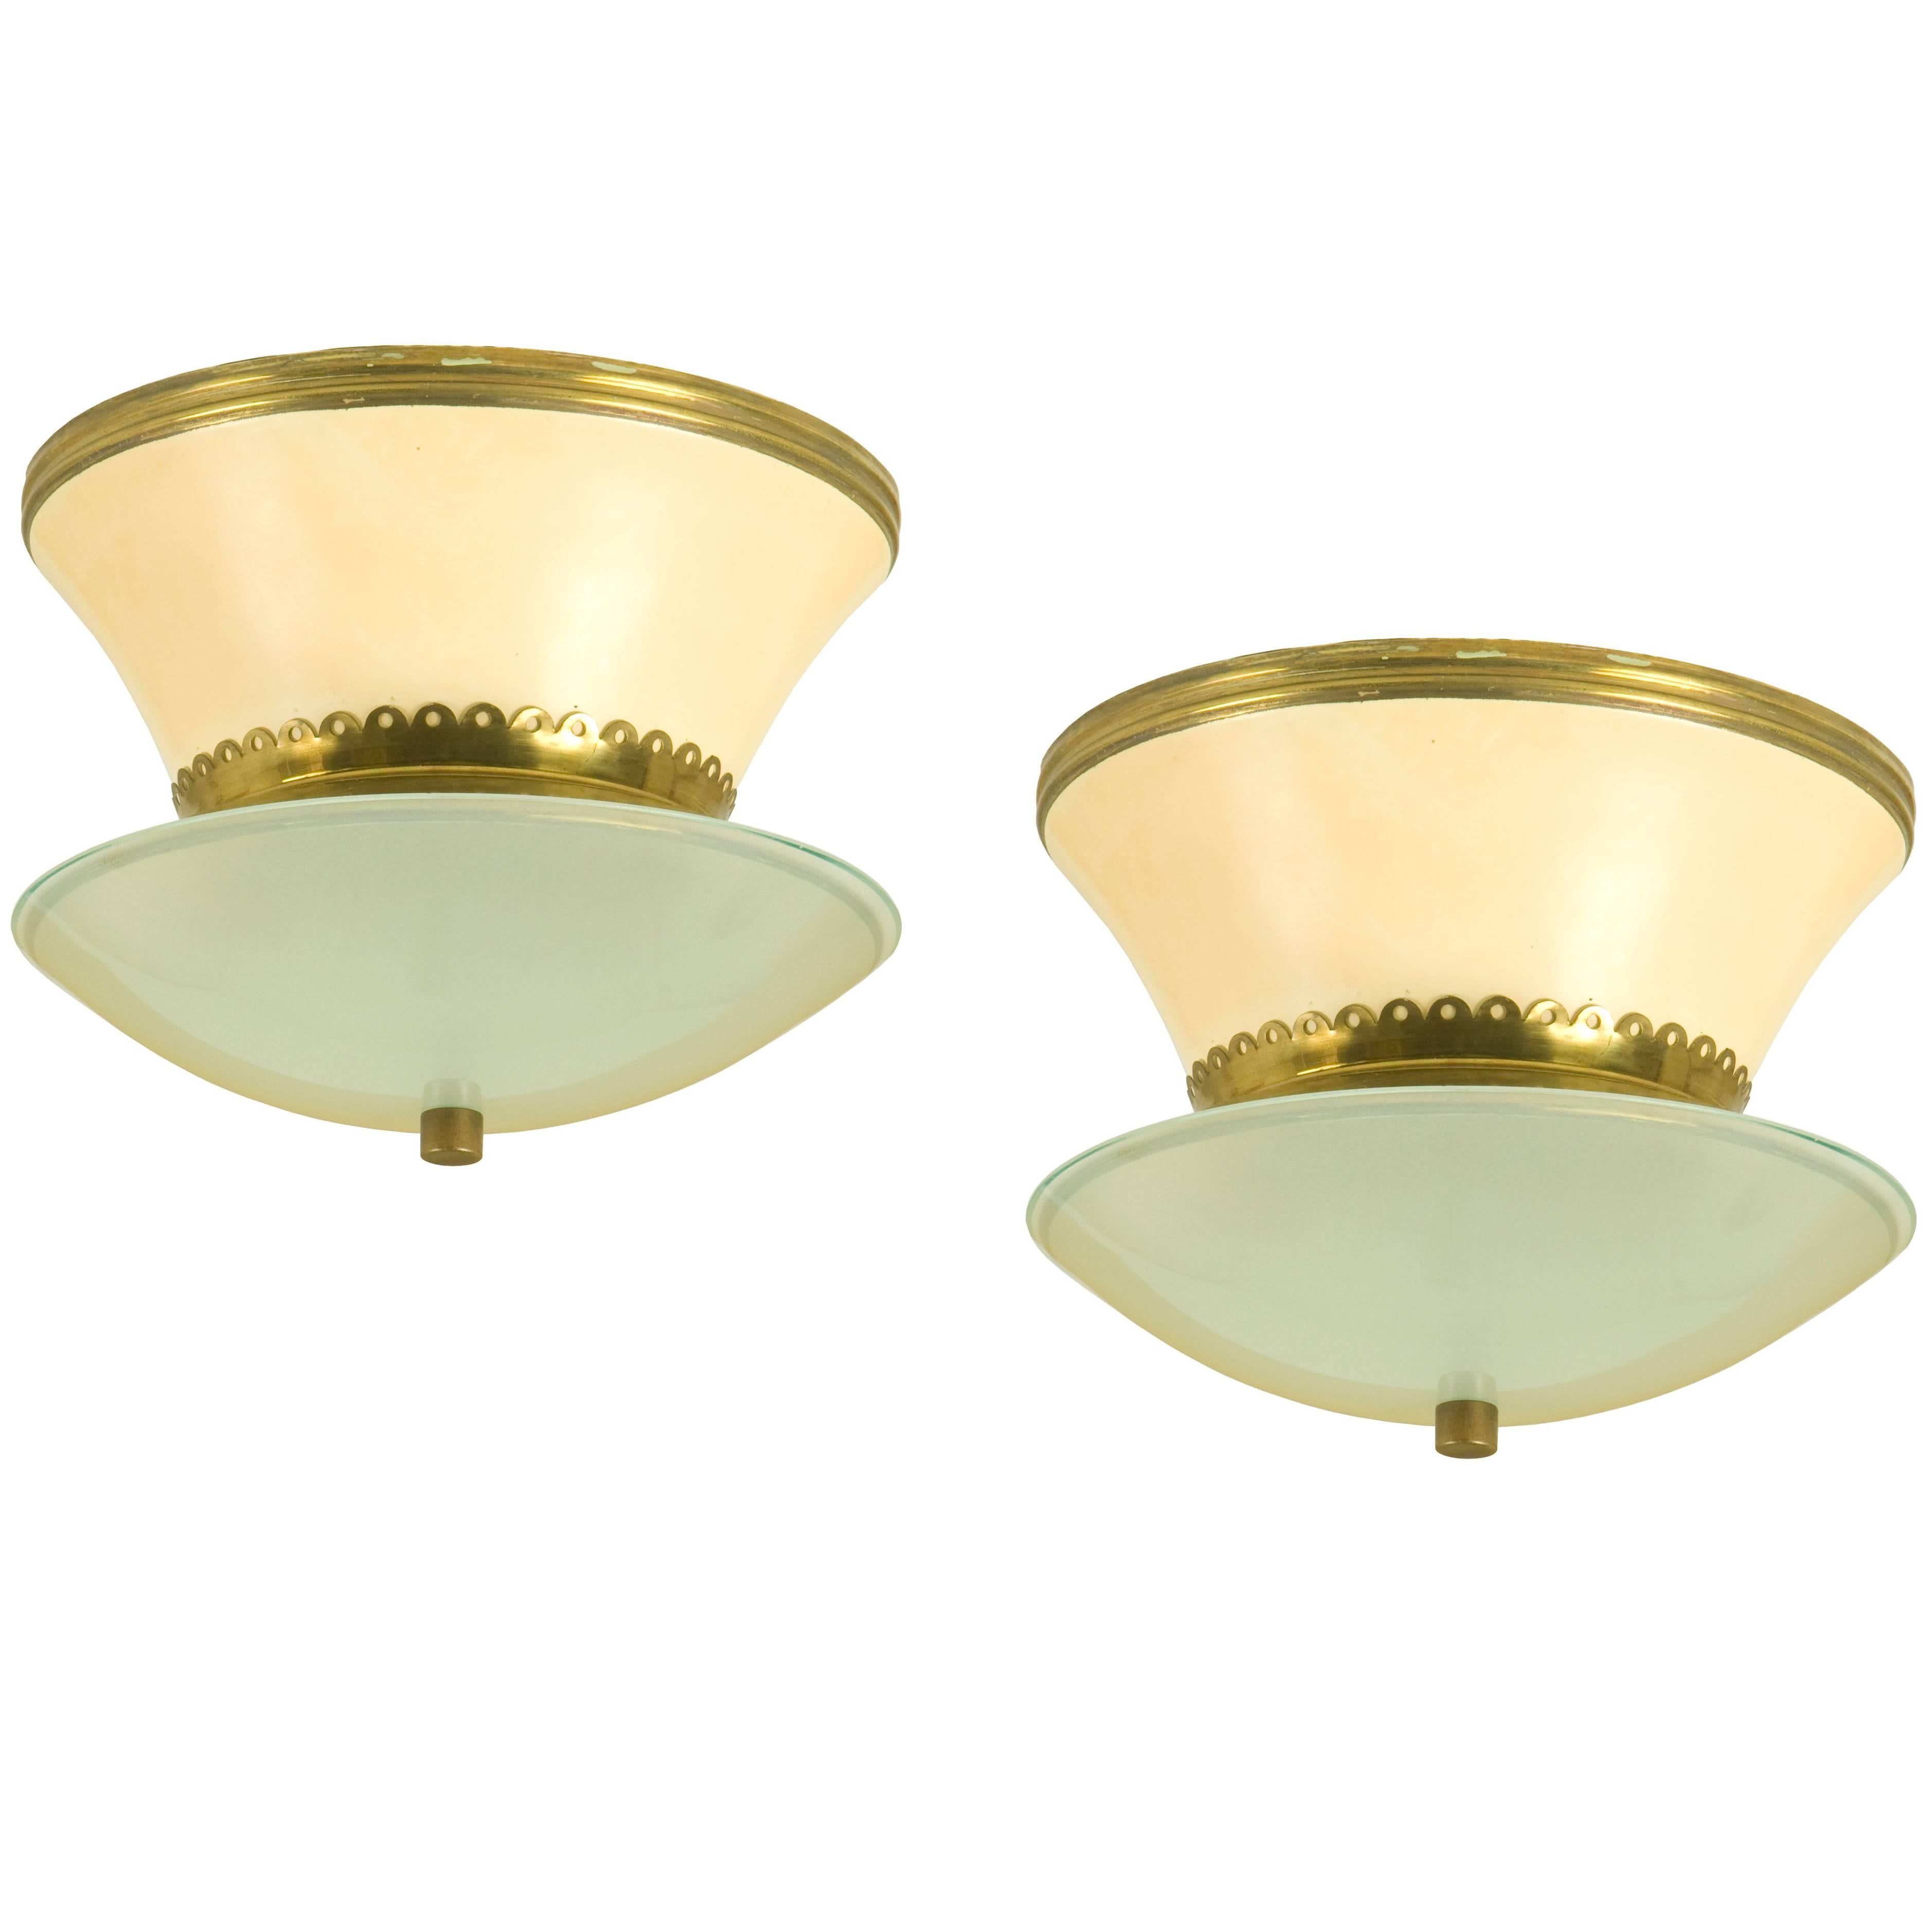 Pair of Italian Glass, Metal & Brass Ceiling Lamps by Stilnovo, 1940s